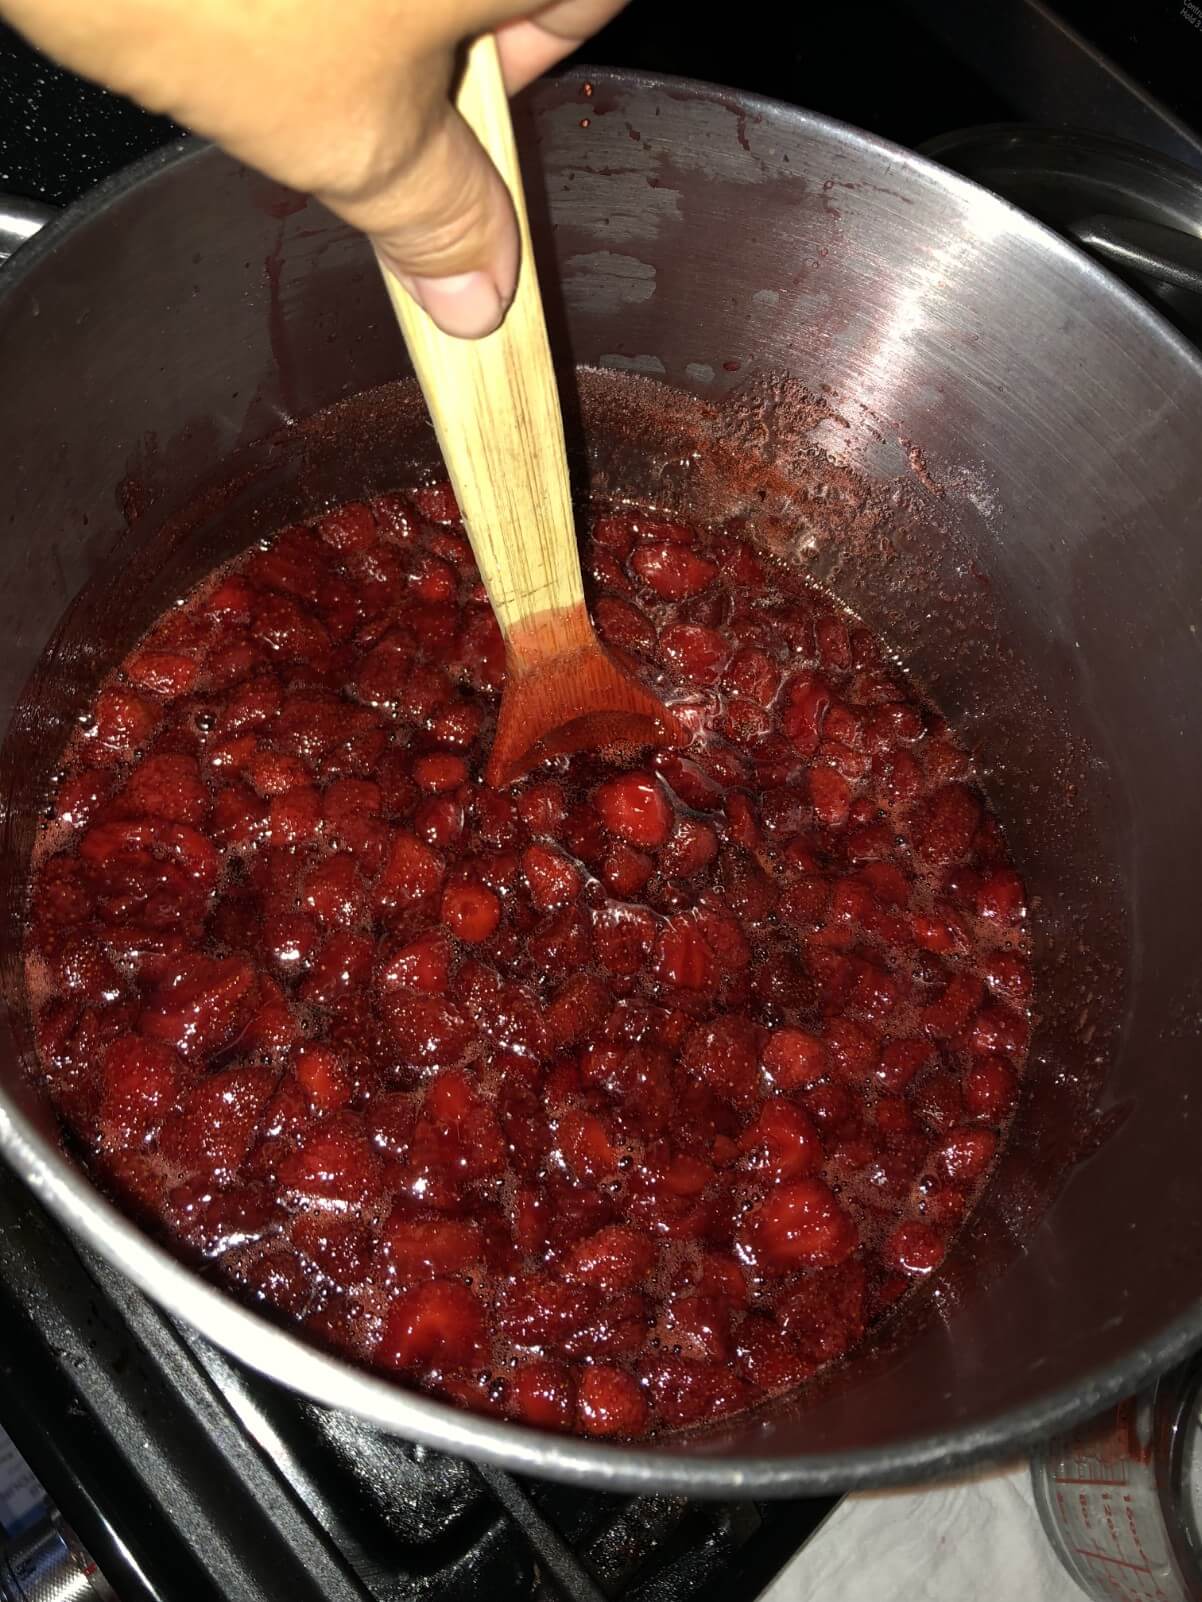 stirring sugar into strawberry jam